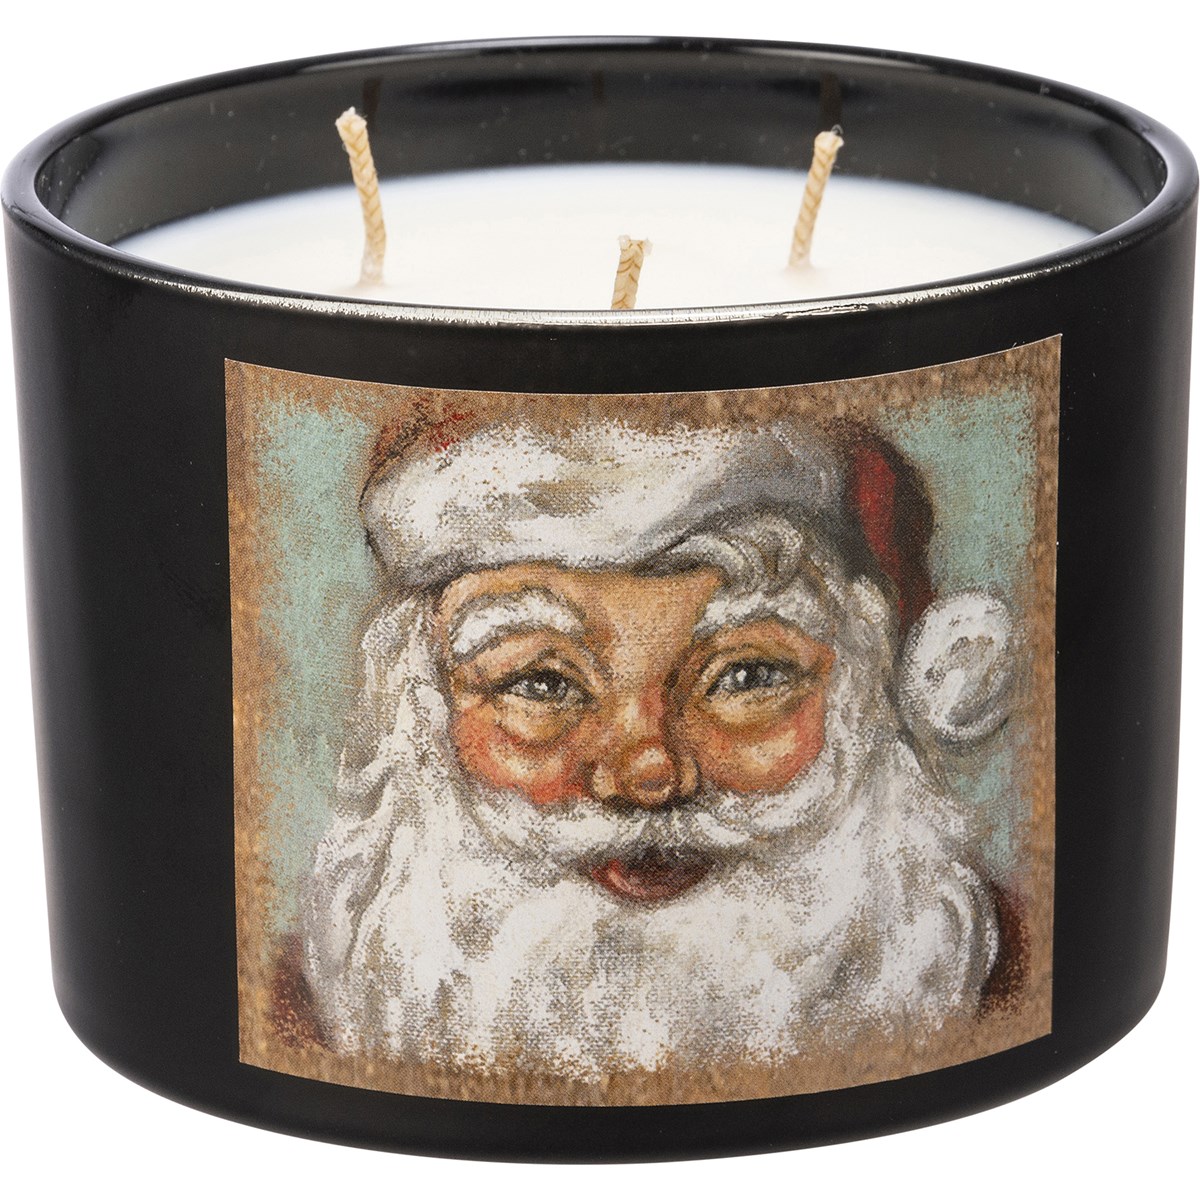 Santa Jar Candle - Soy Wax, Glass, Cotton